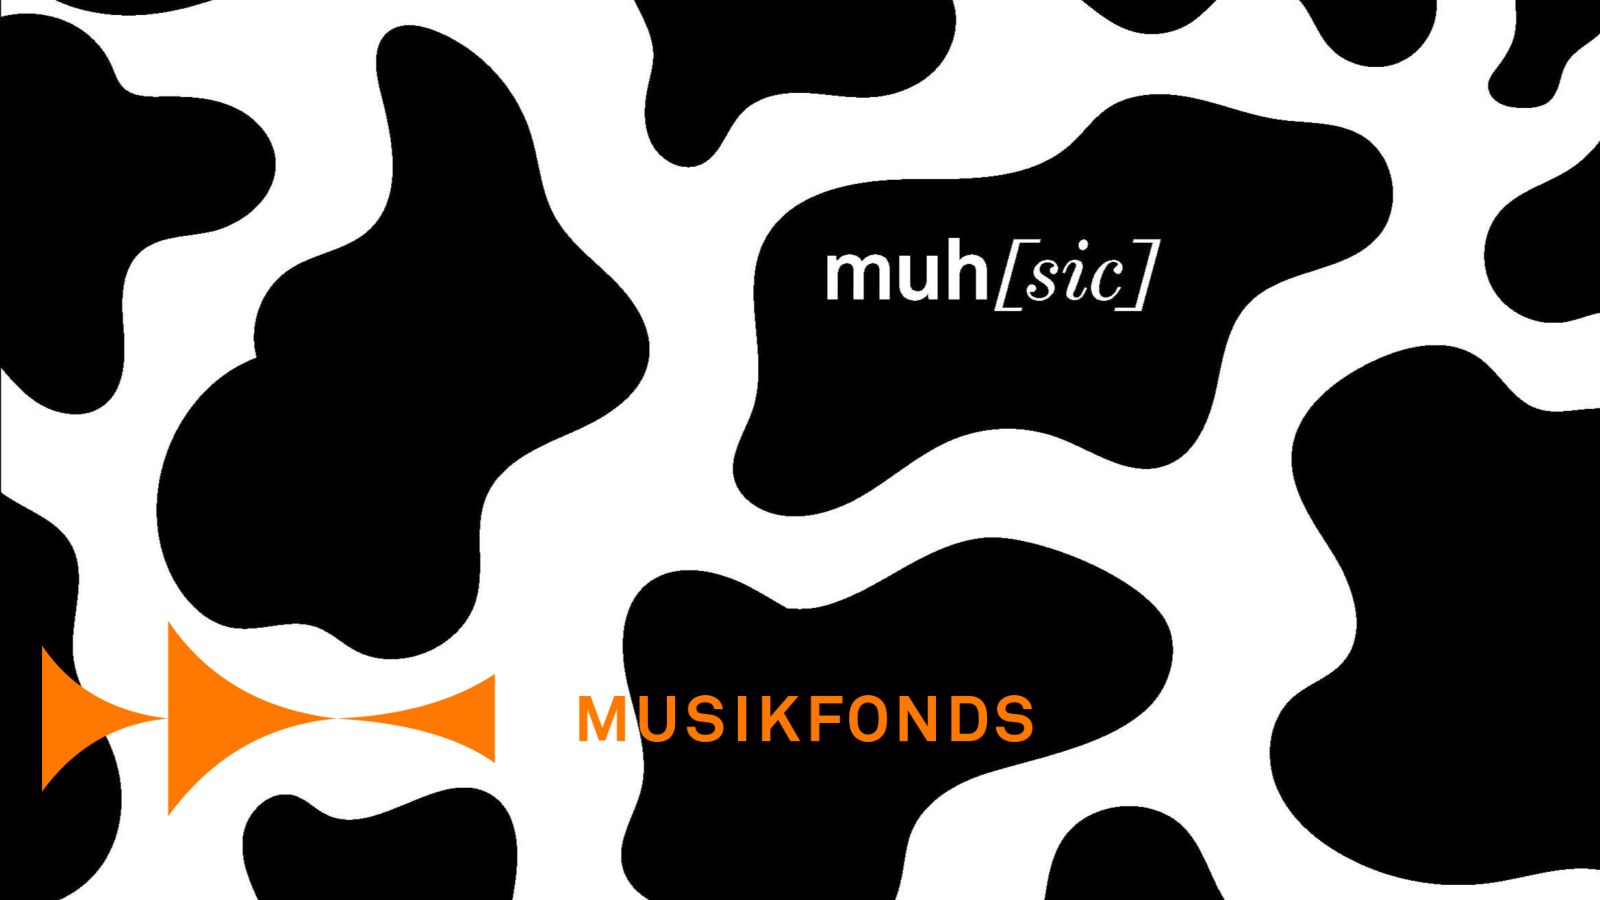 Musikfonds_muhsic